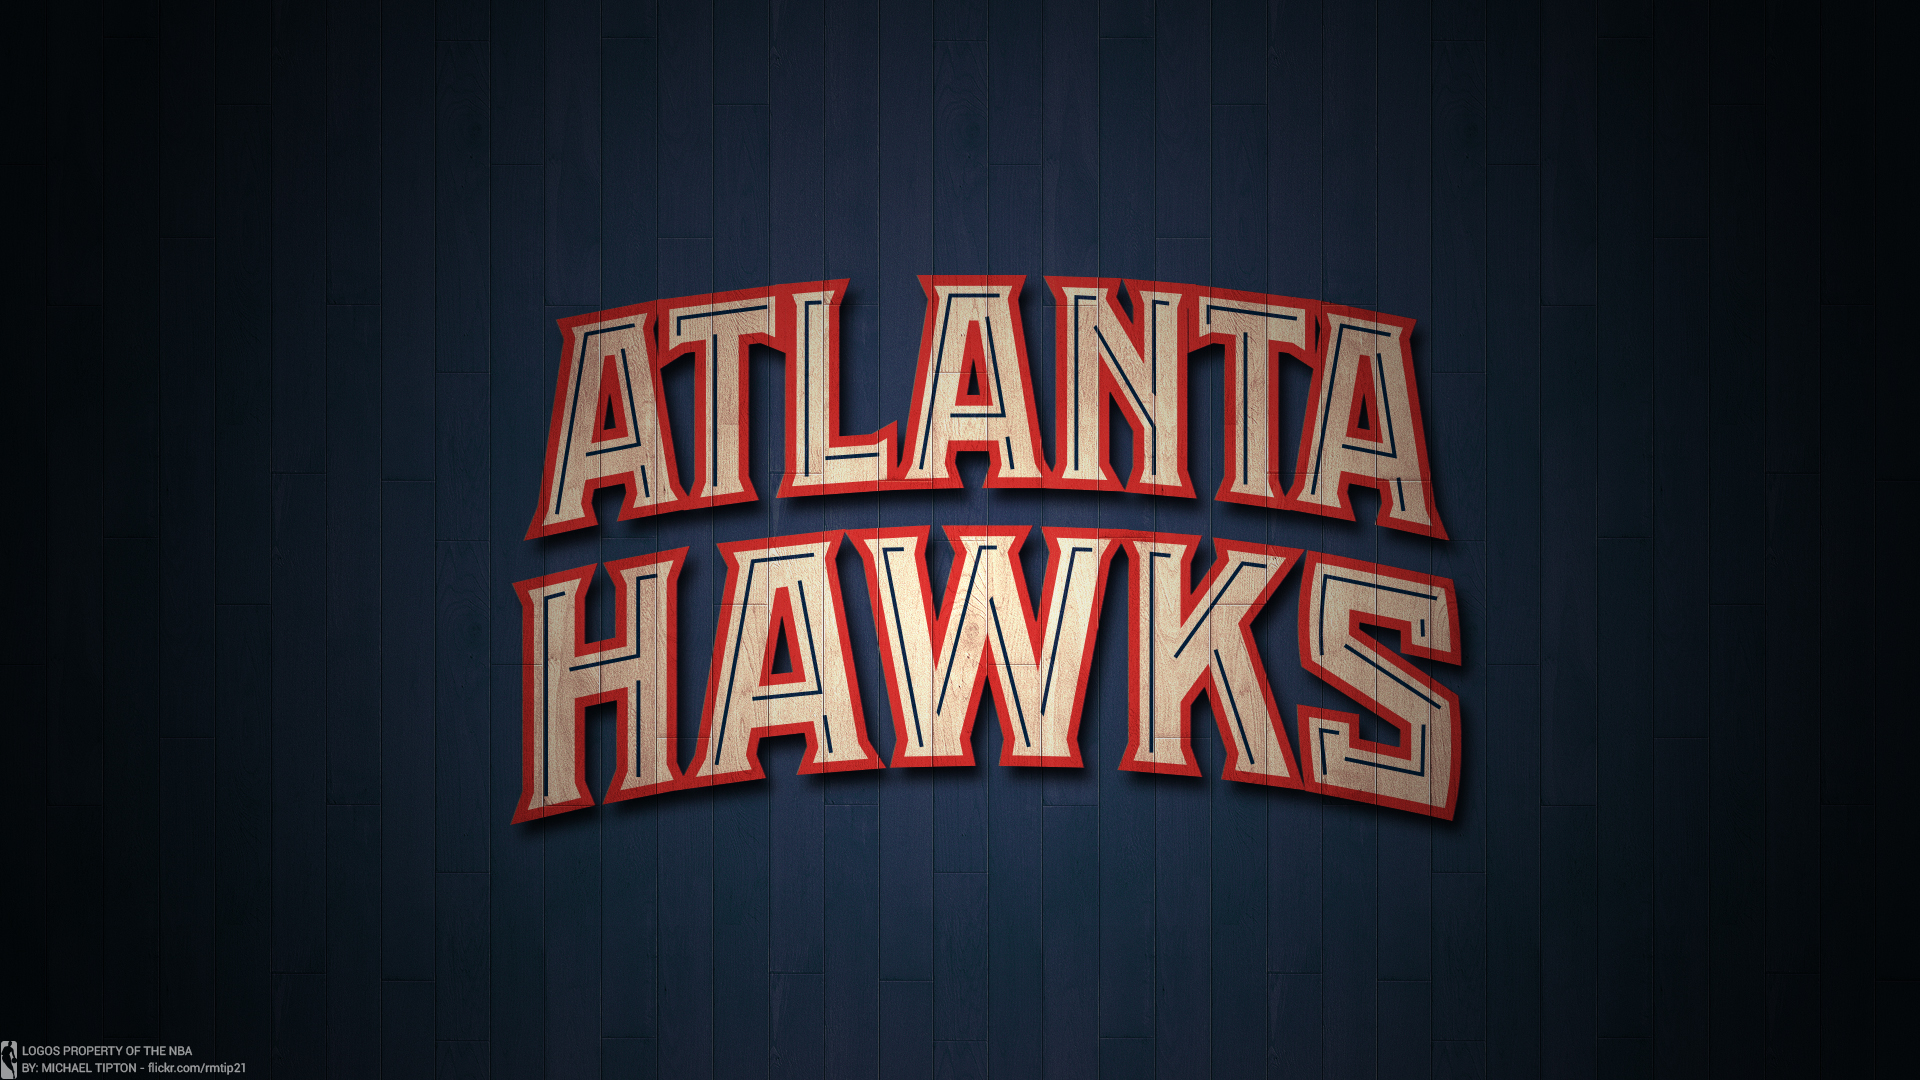 Atlanta Hawks on Twitter Its Wednesday so we had to gift yall some new  wallpapers  TrueToAtlanta x WallpaperWednesday  httpstcoSwwNUQZmy7  X